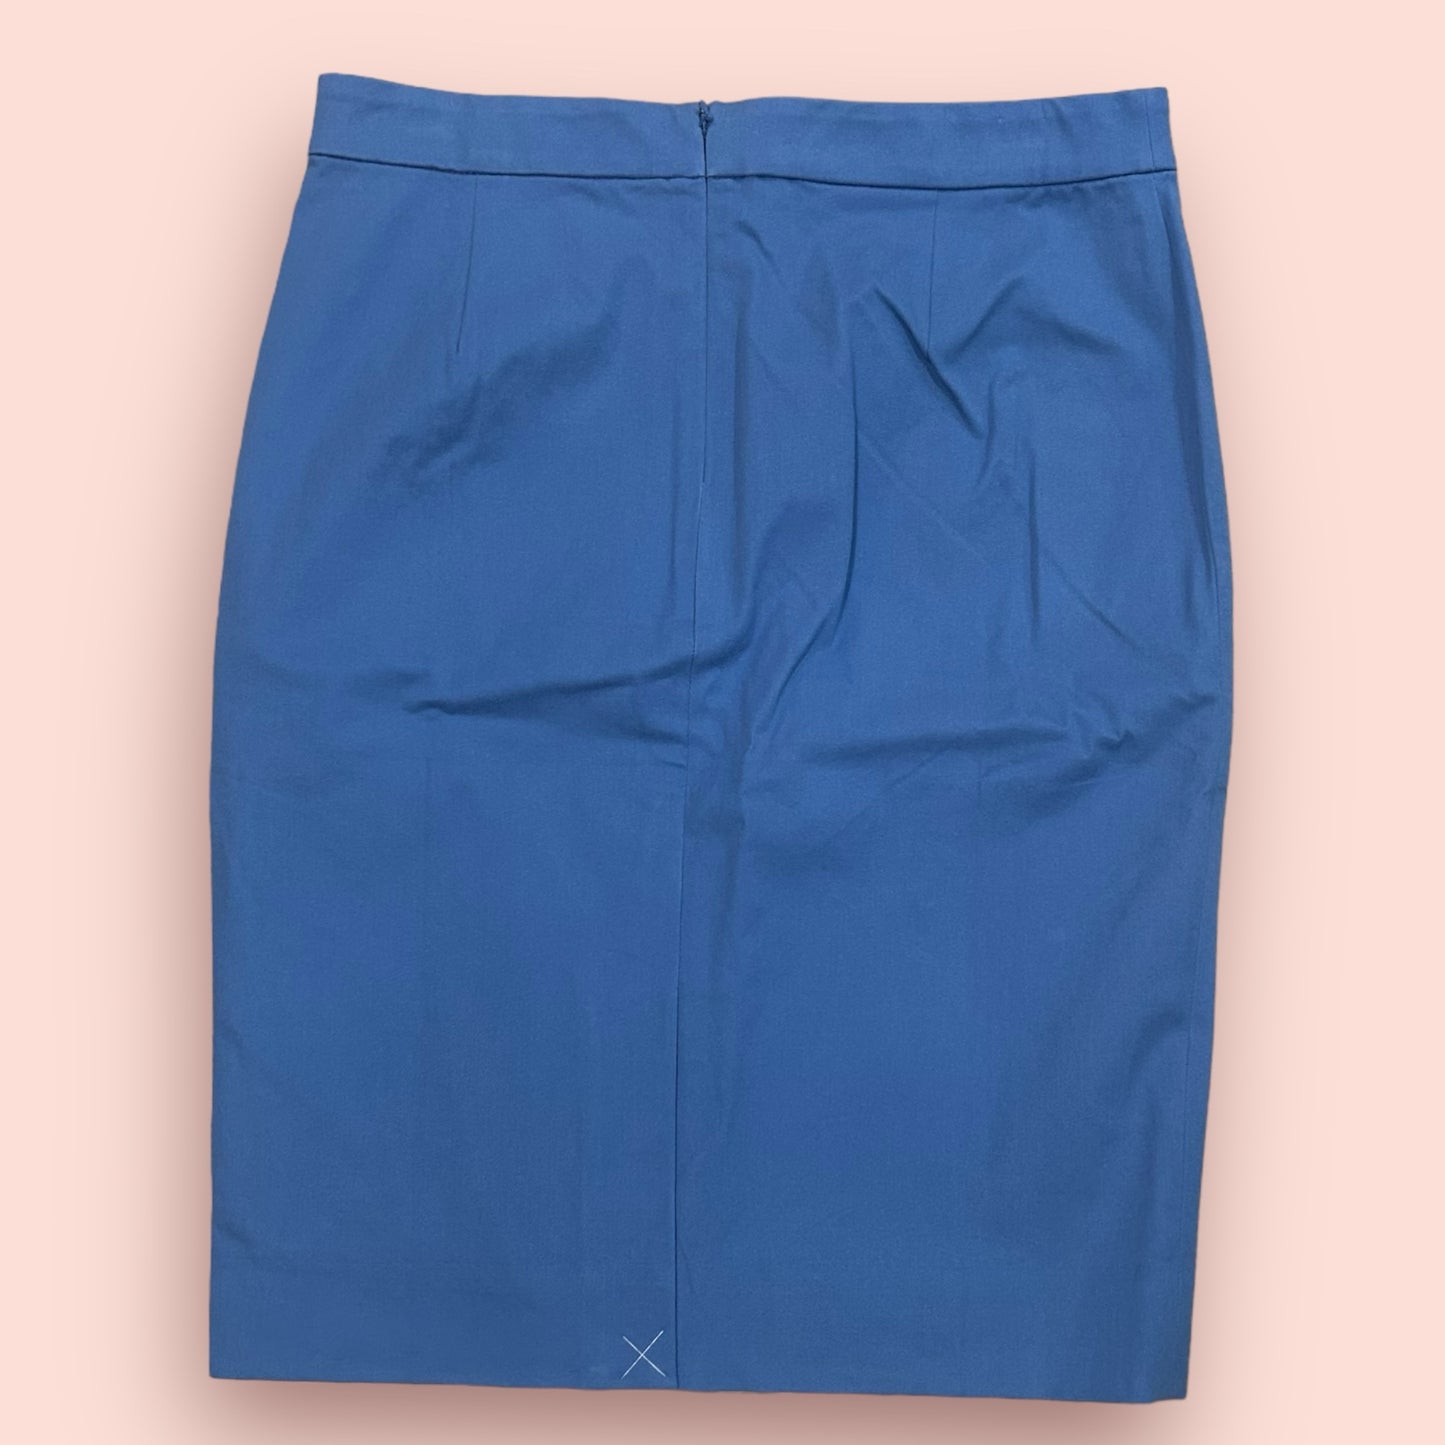 J. Crew Size 6 NWT Blue Skirt